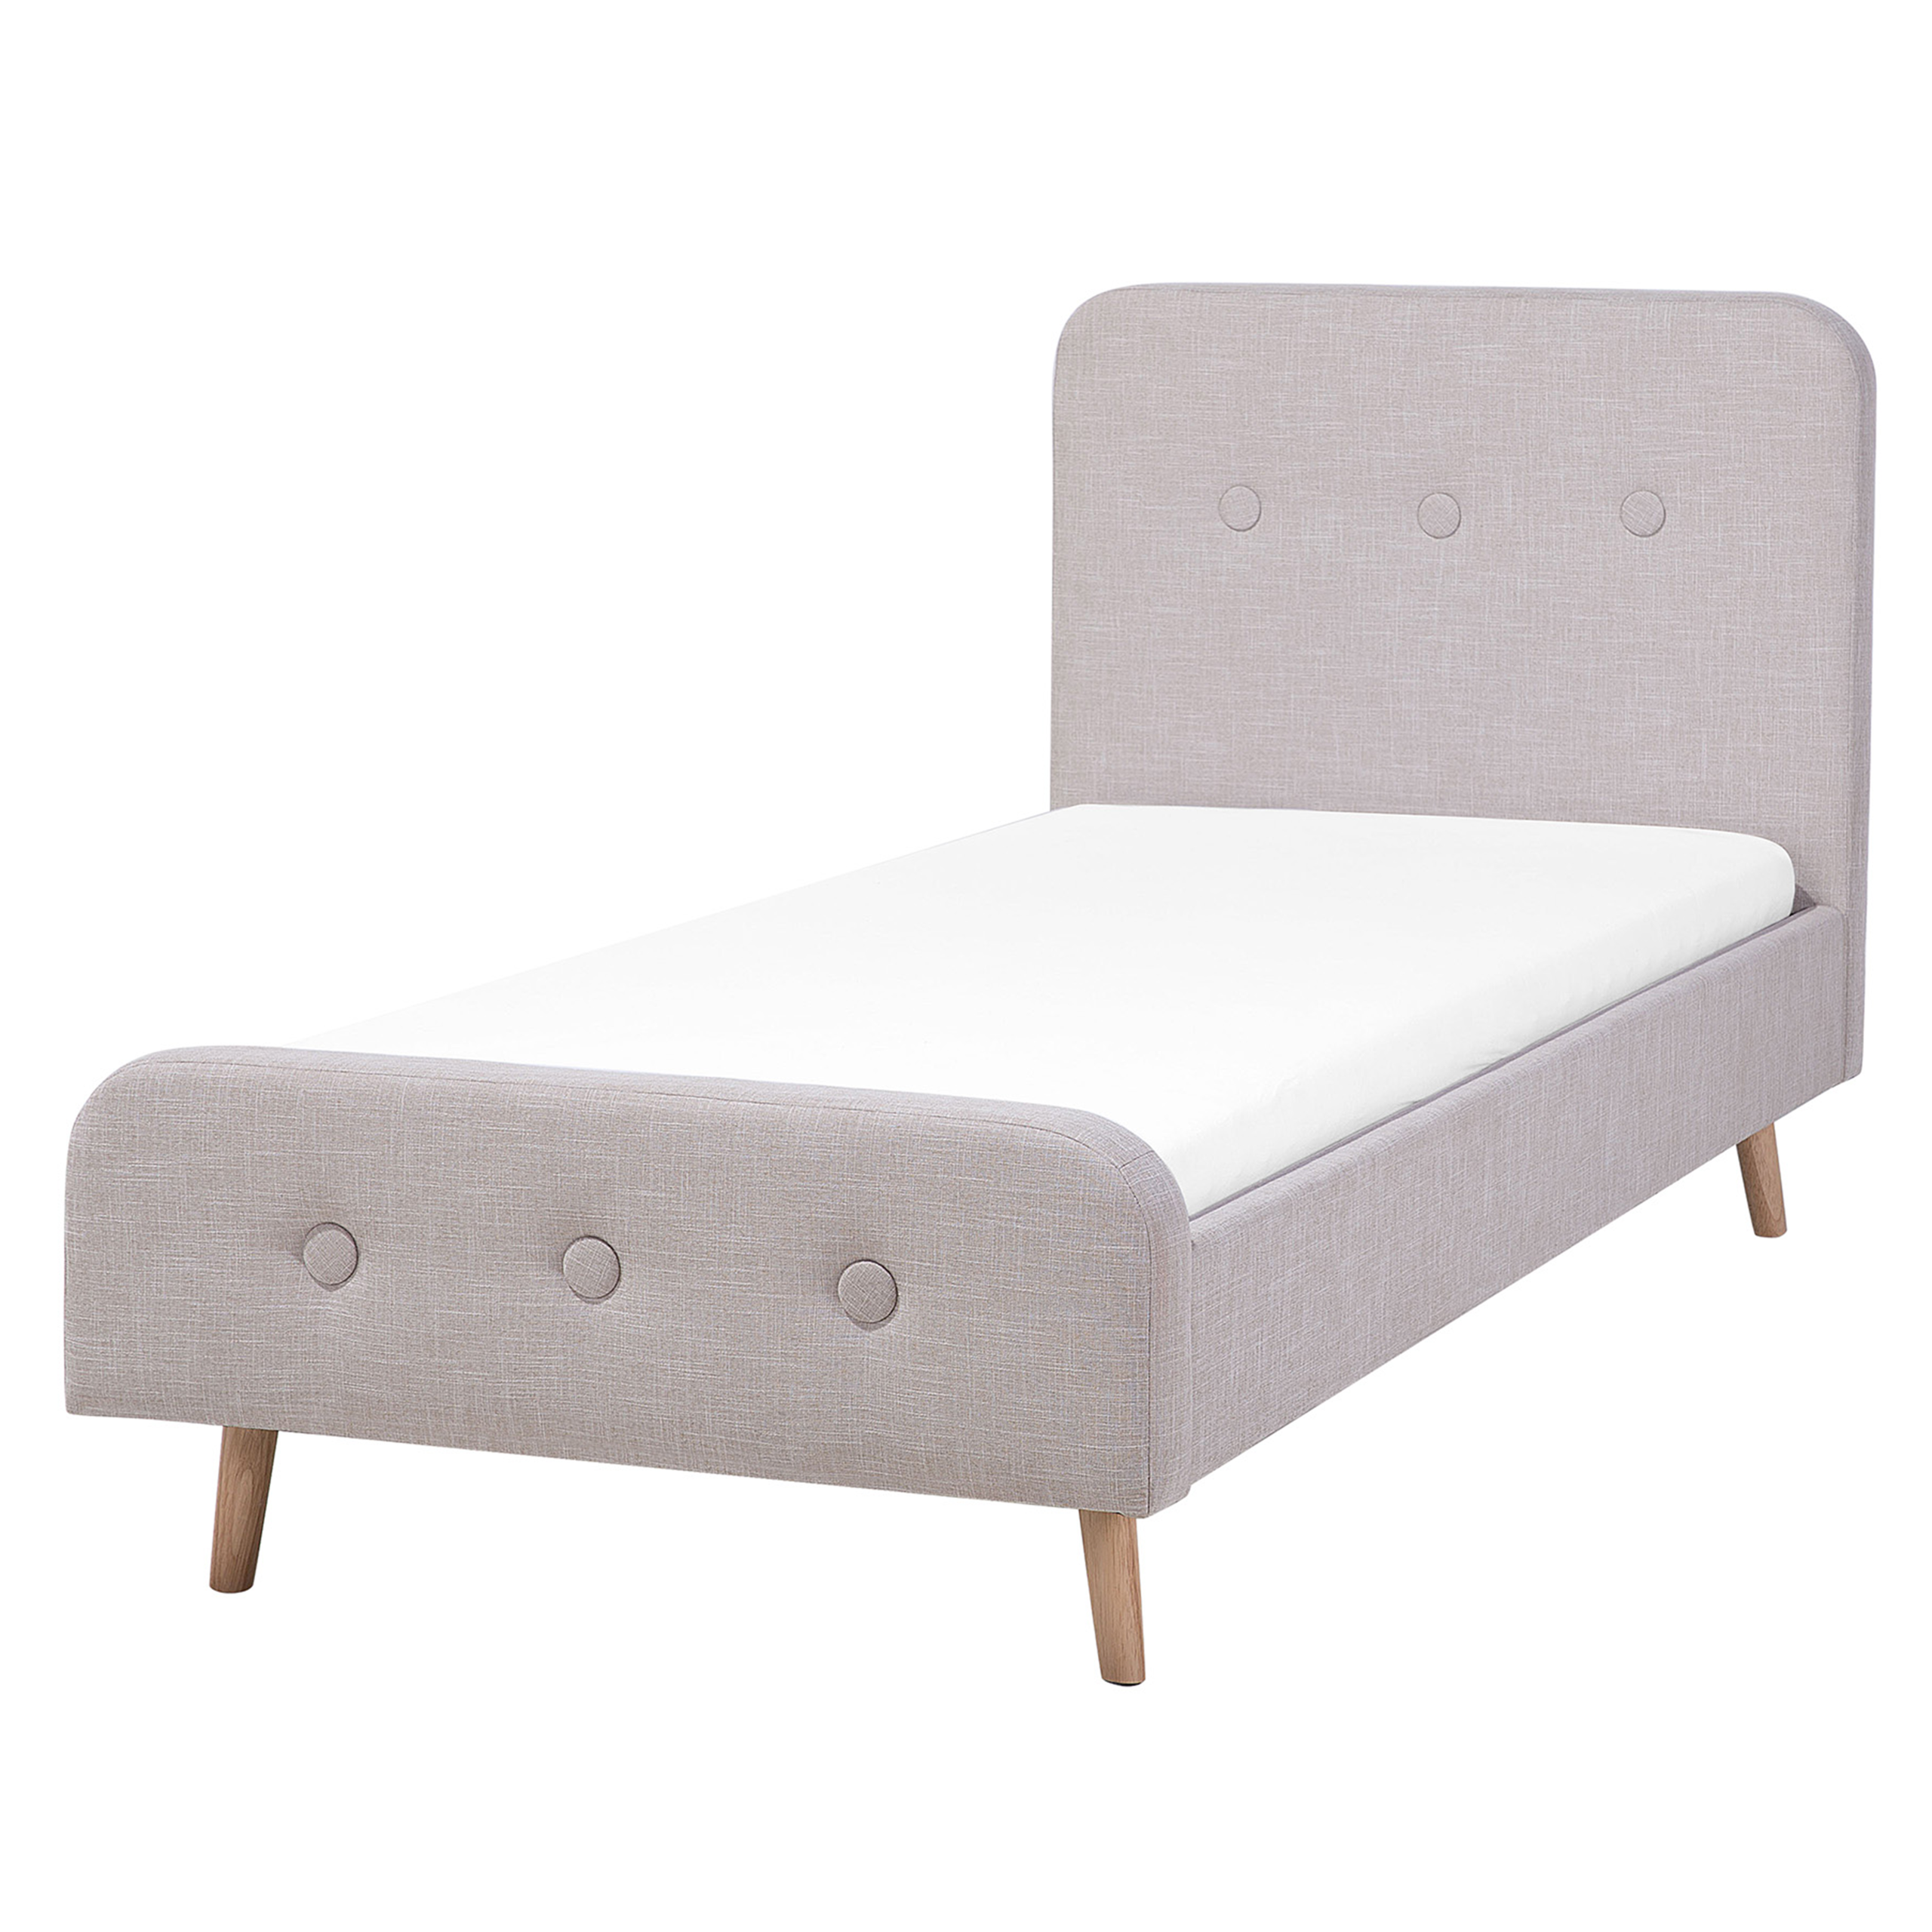 Beliani Slatted Bed Frame Beige Polyester Fabric Upholstered Wooden Legs 3ft EU Single Size Modern Design